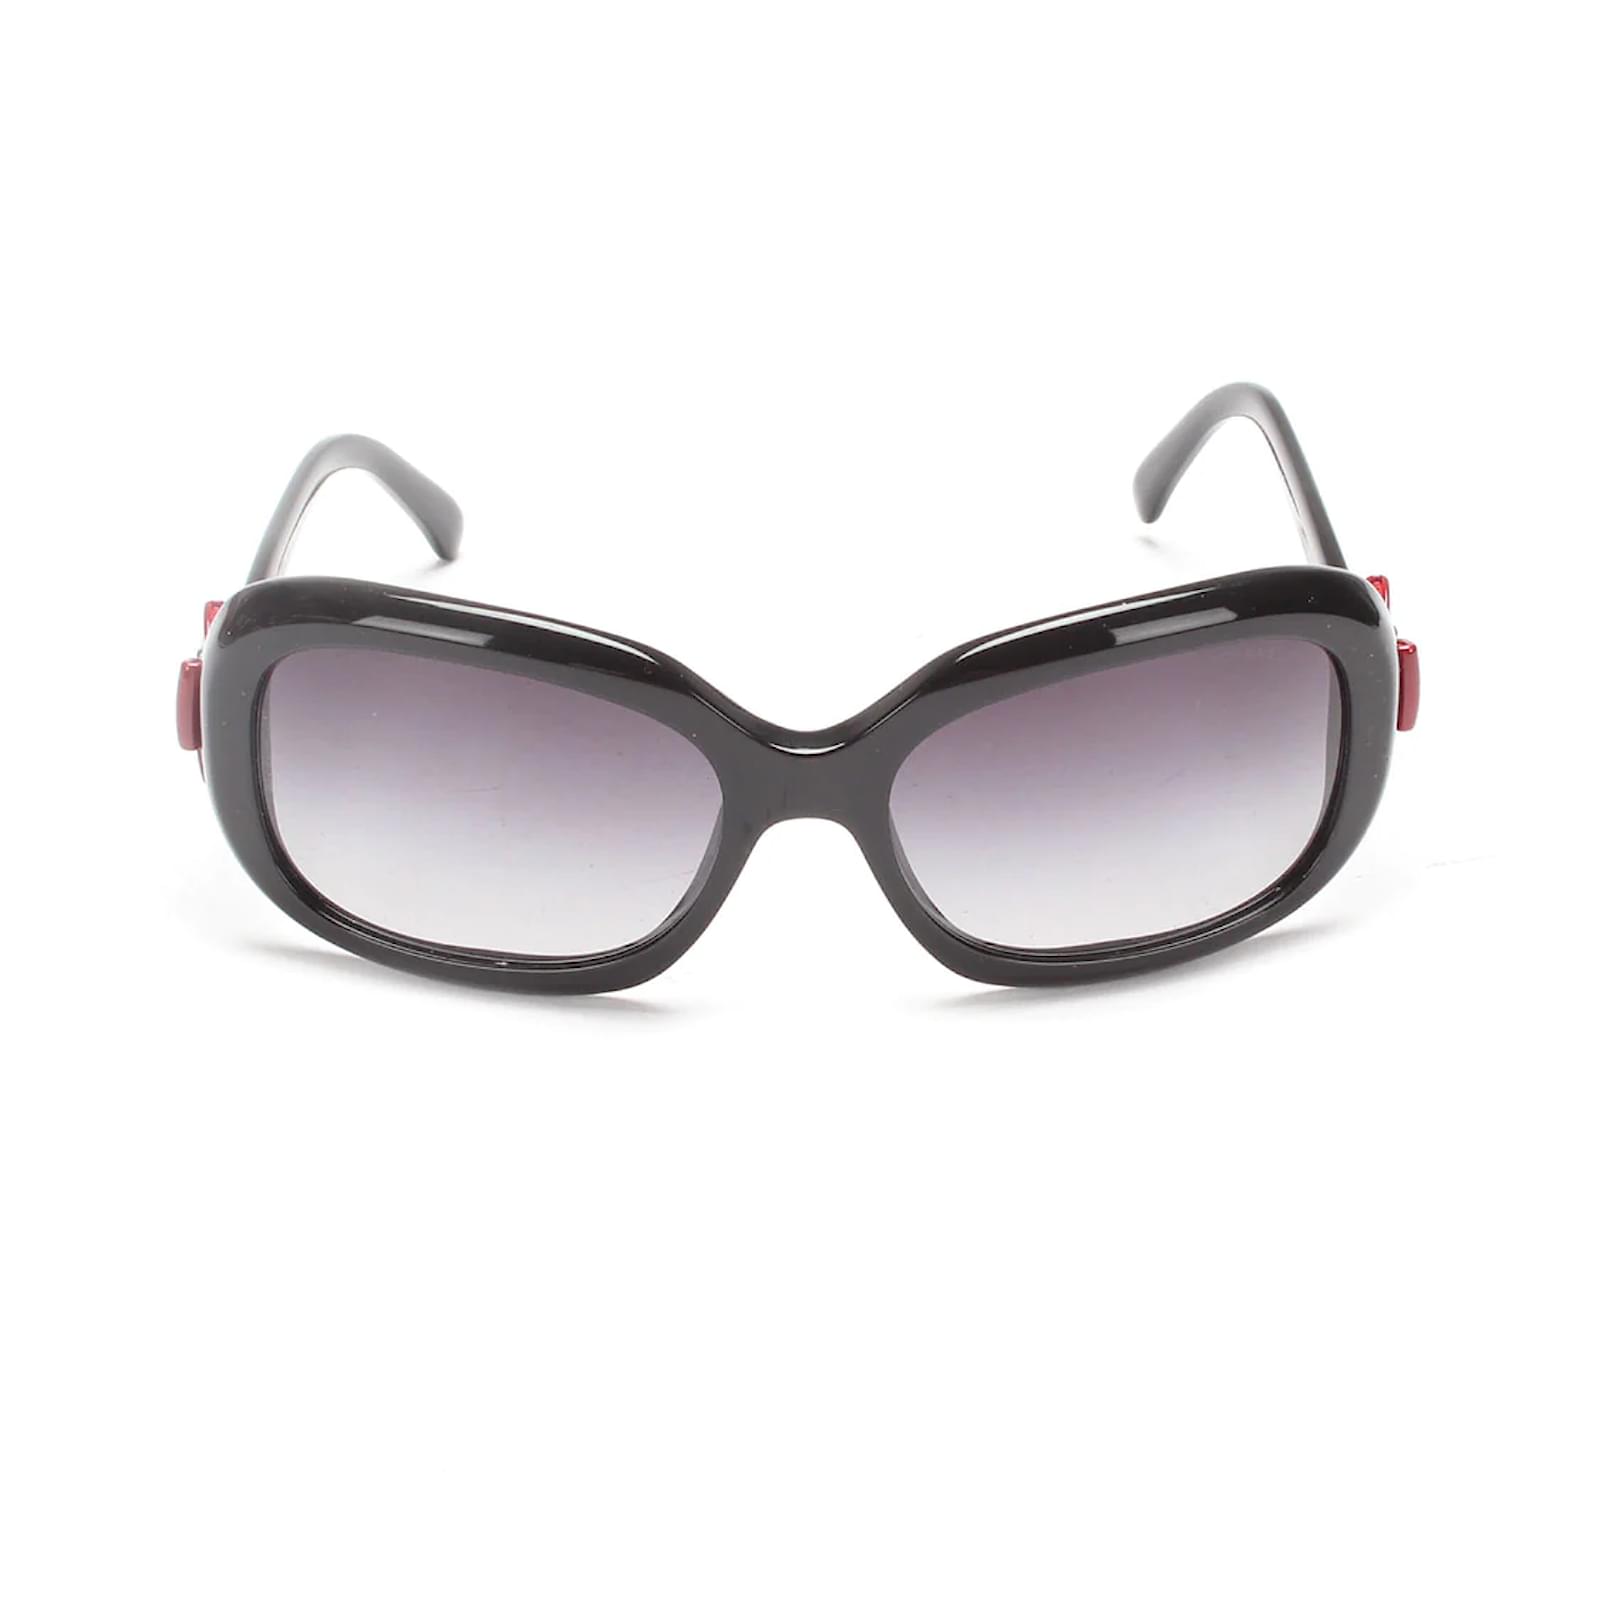 chanel white and black sunglasses